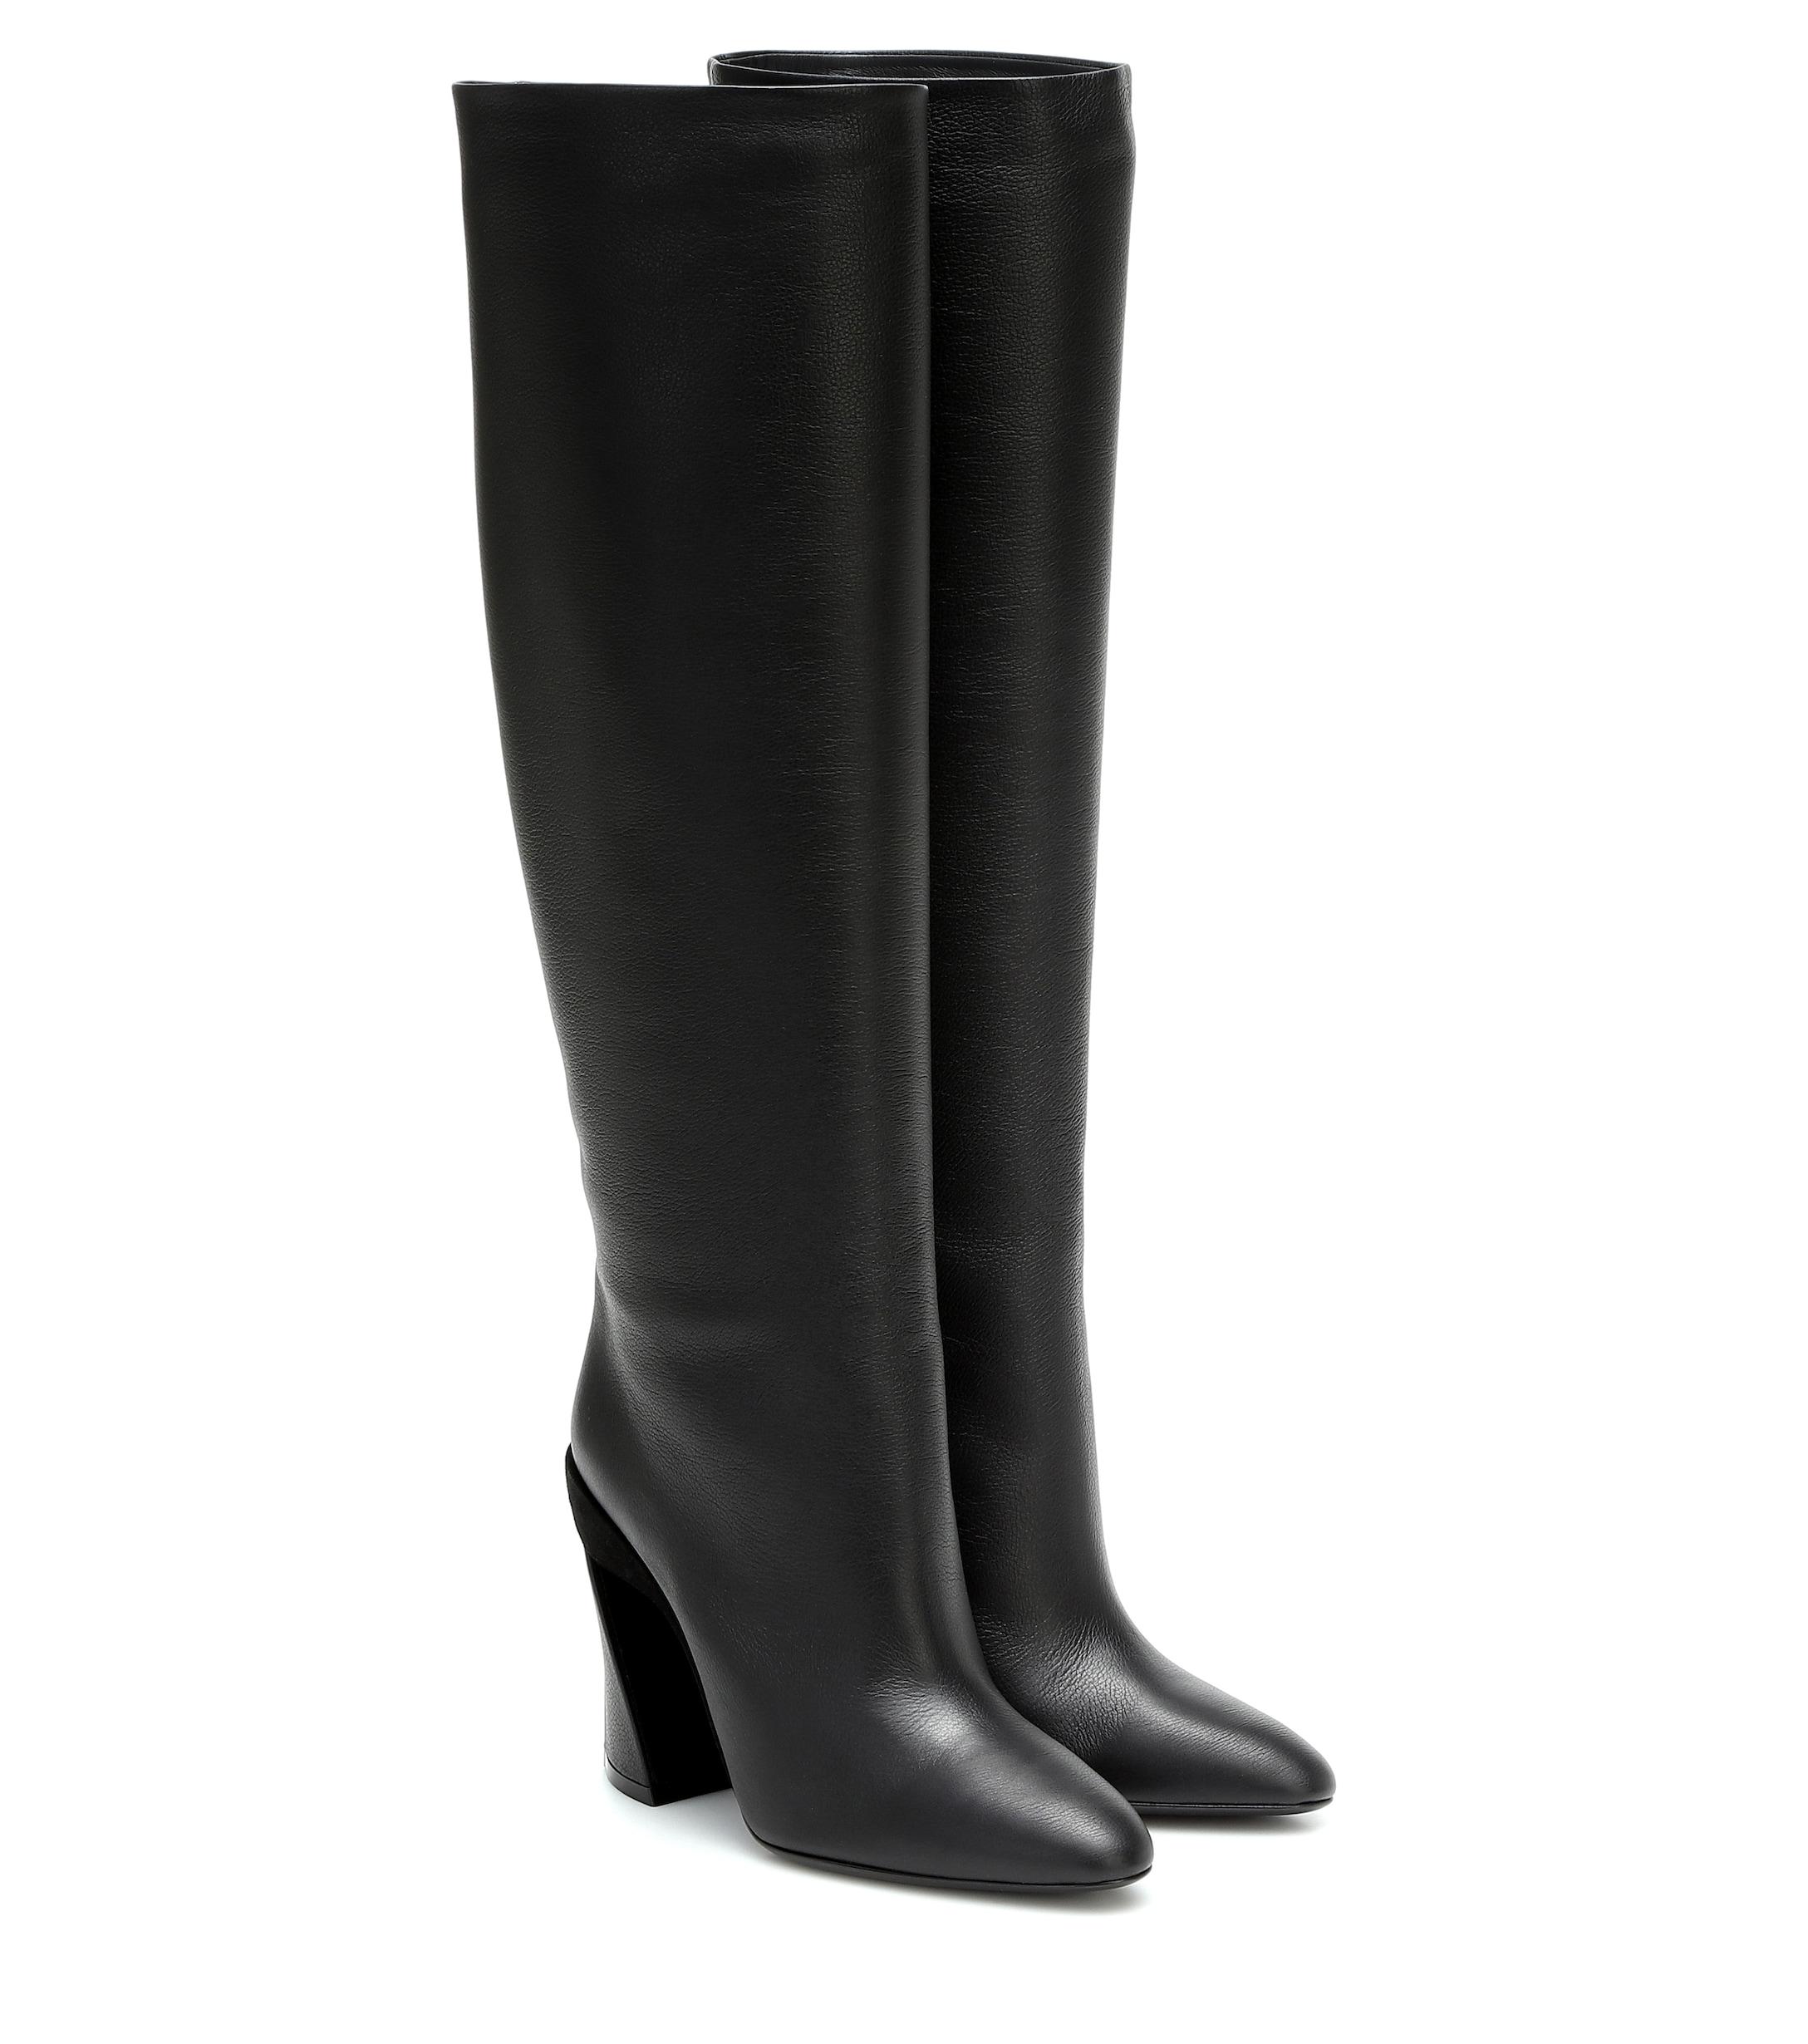 Ferragamo Antea Knee-high Leather Boots in Black - Lyst